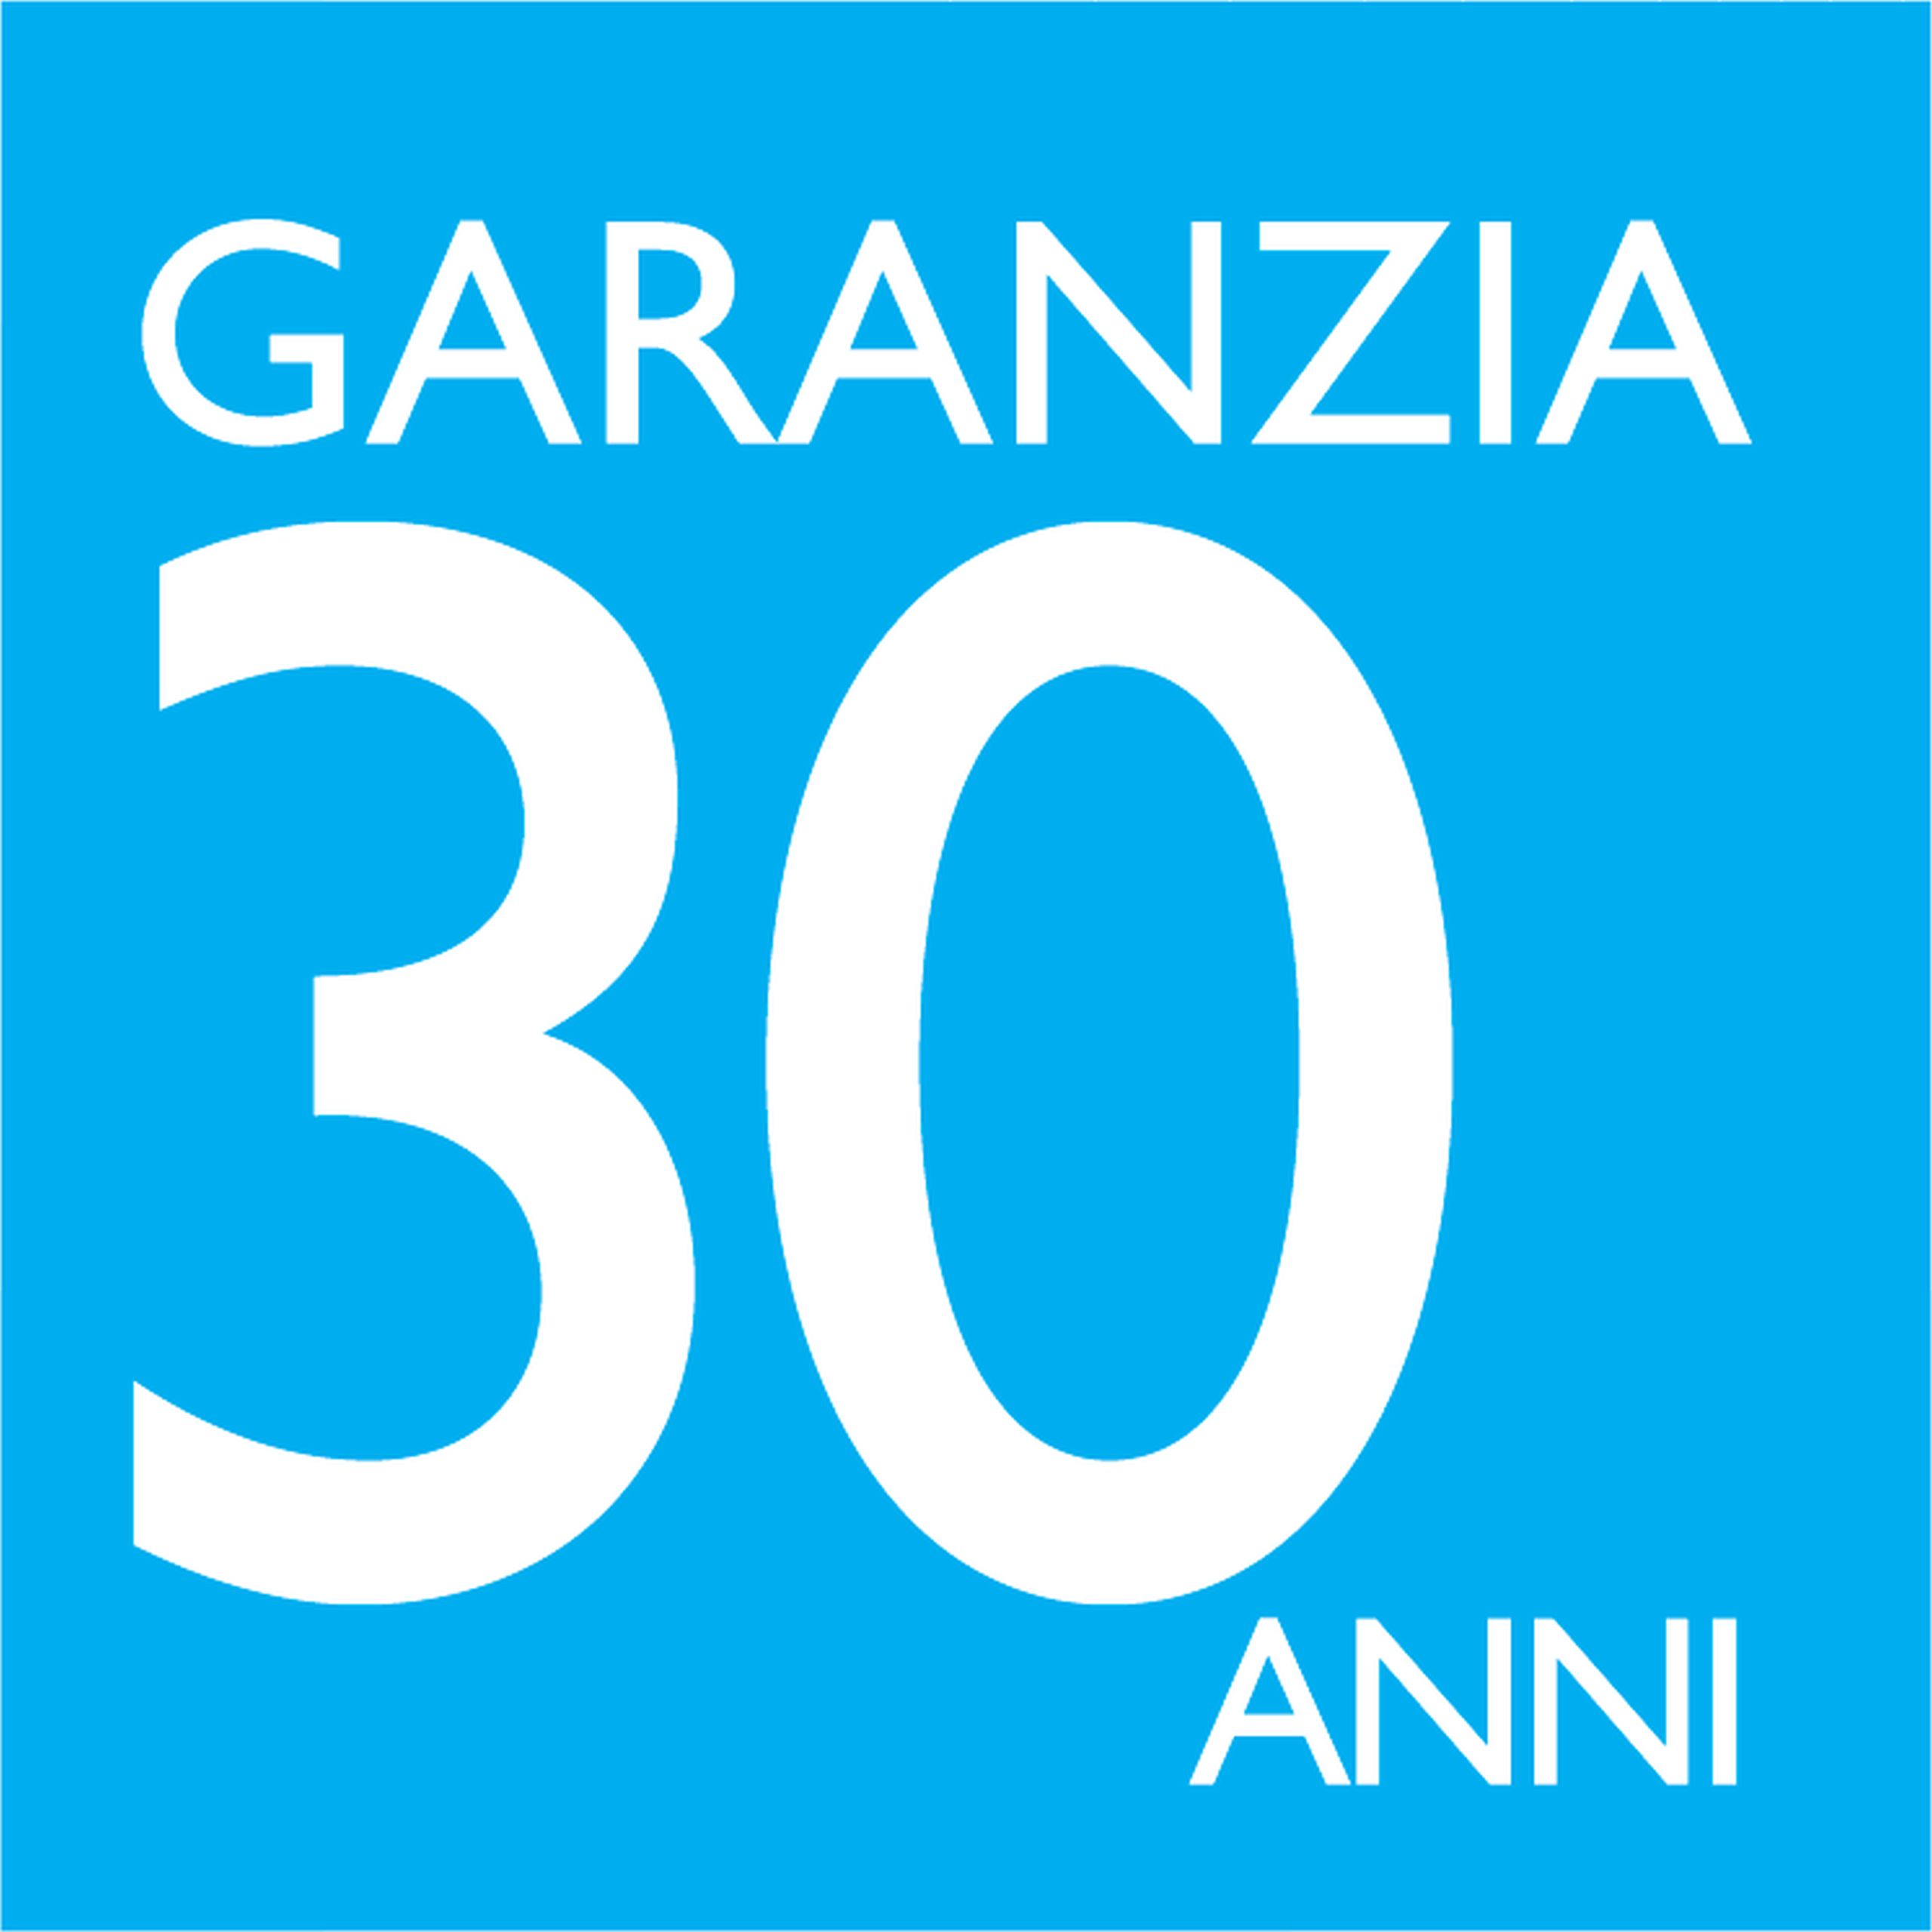 Garanzia-30-anni